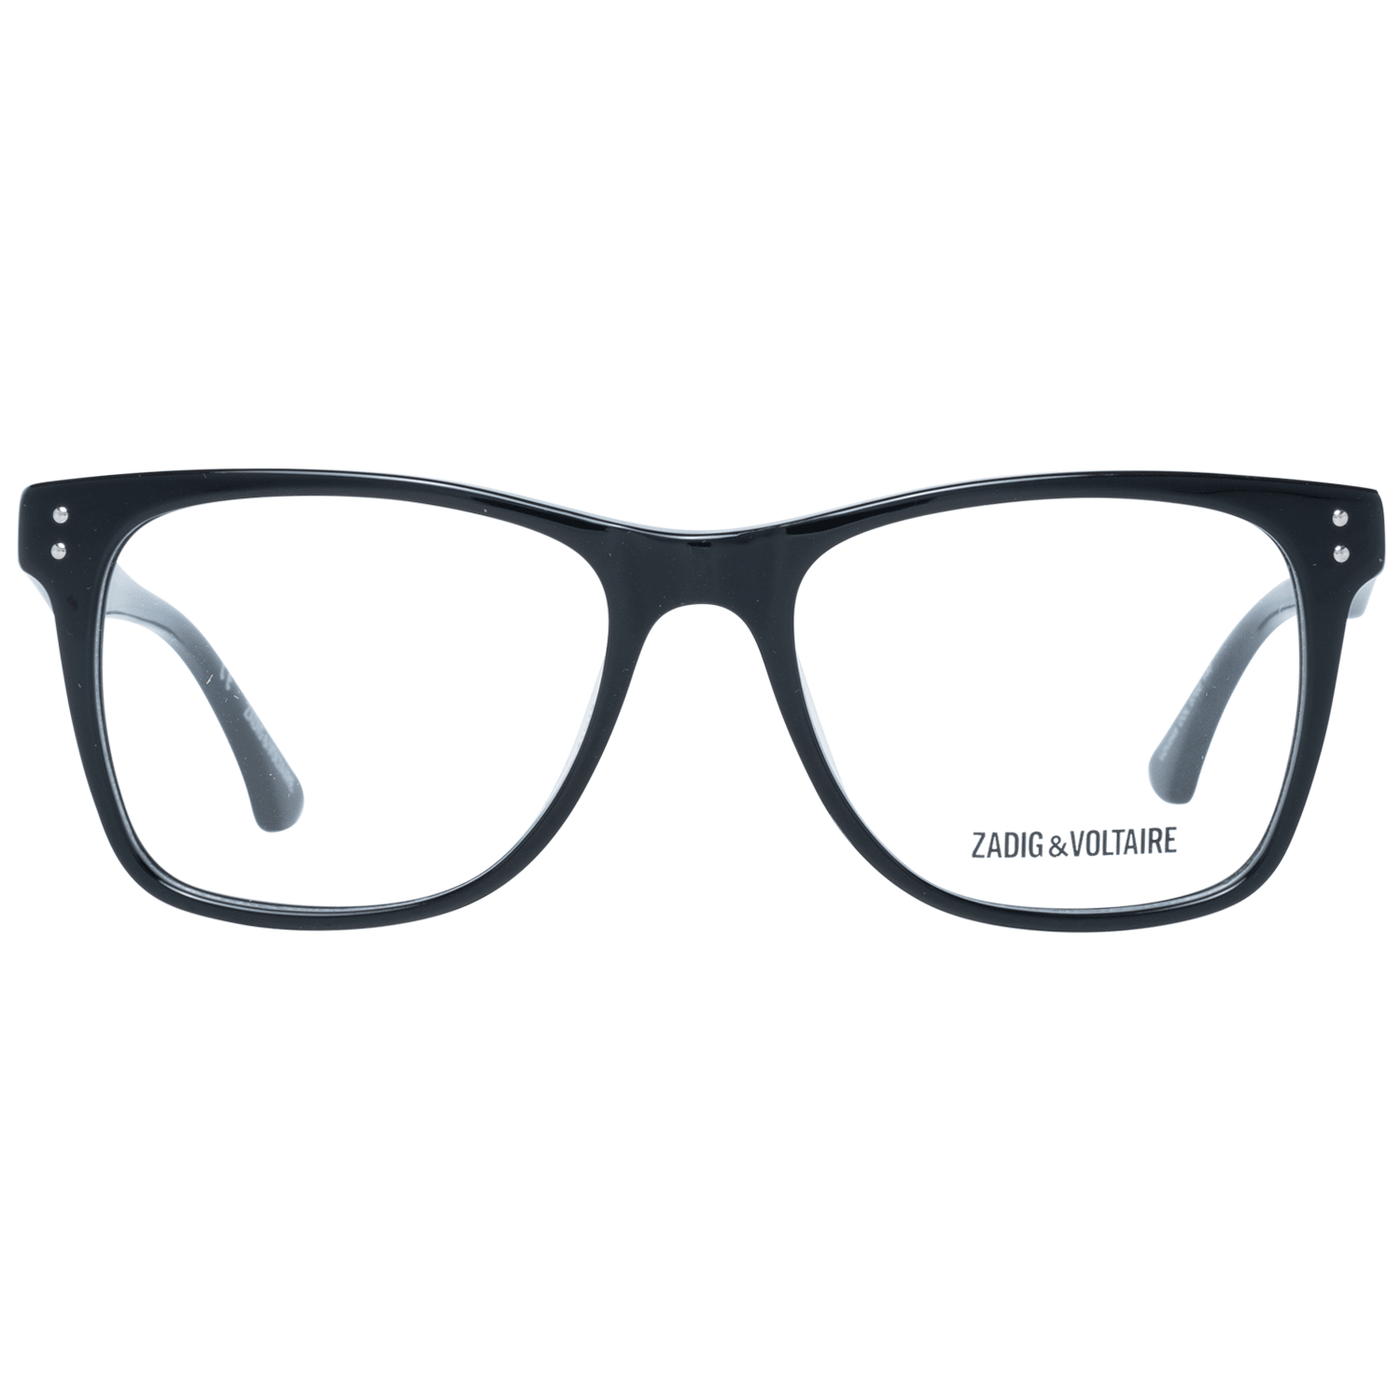 Zadig & Voltaire Black Unisex Optical Frames